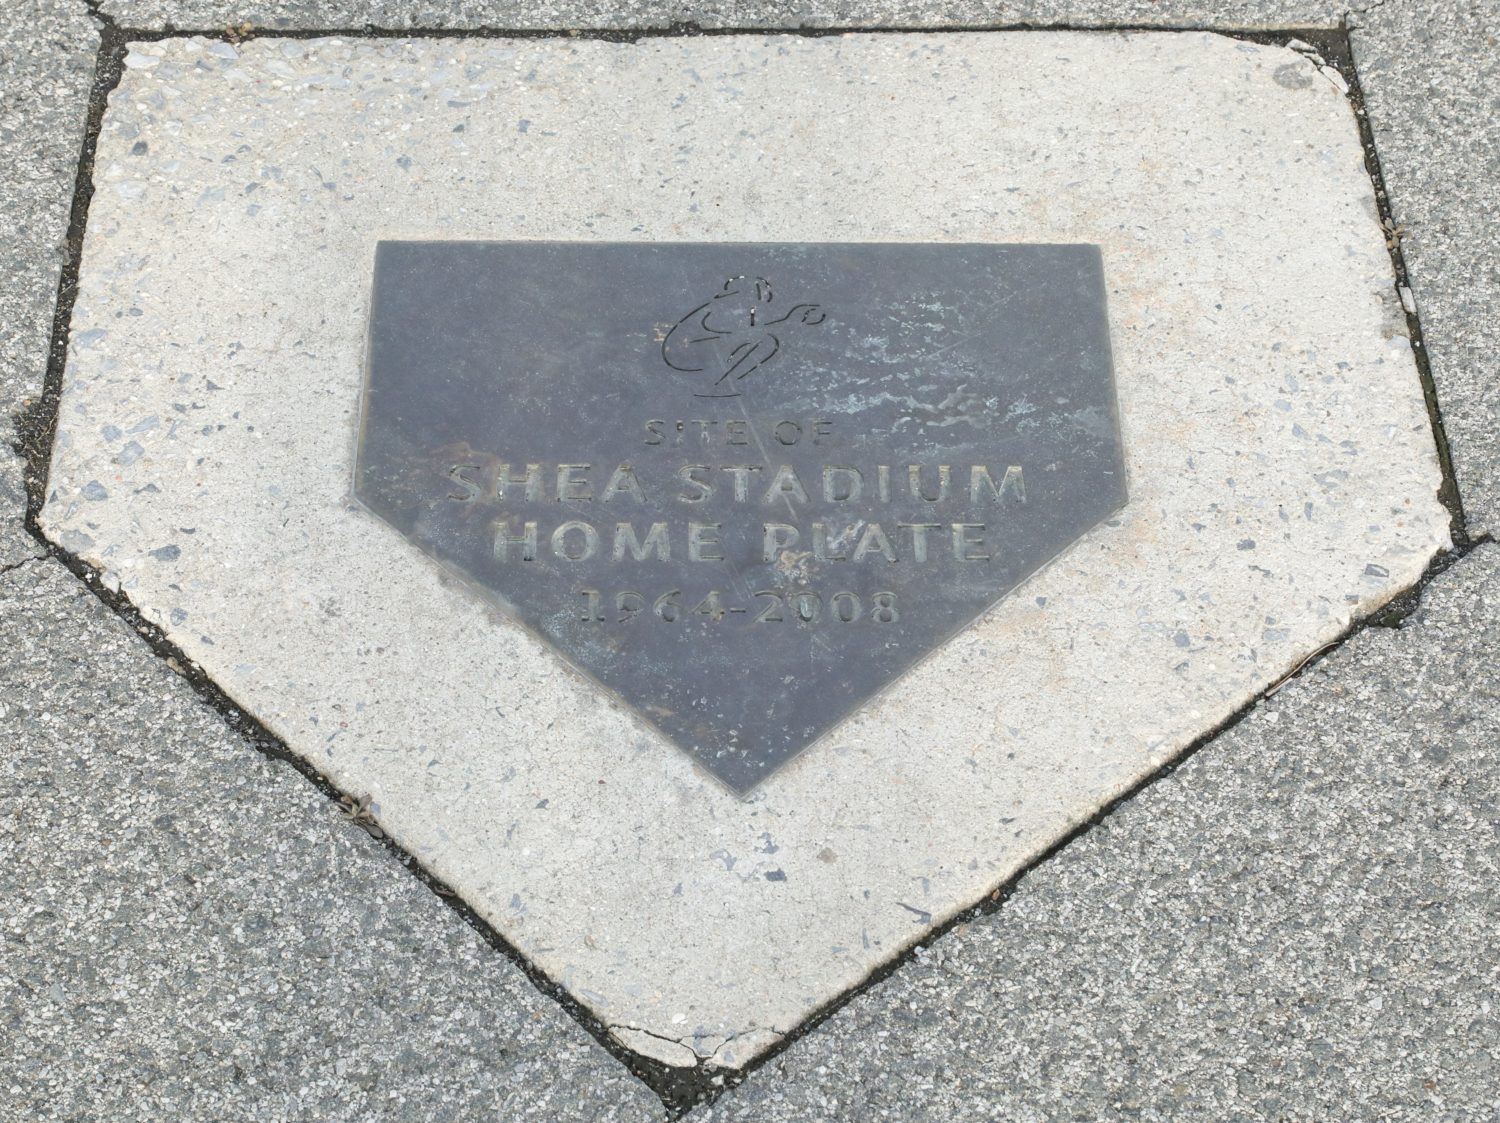 Site of Shea Stadium Home Plate